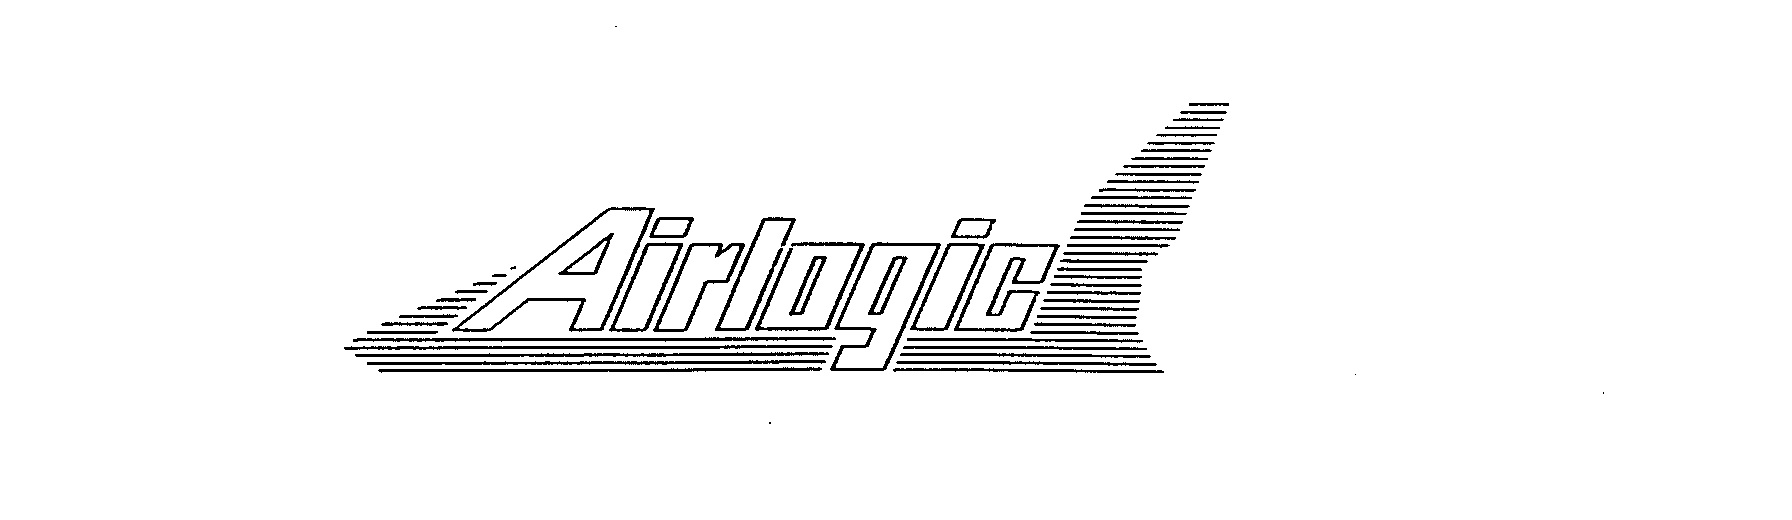 Trademark Logo AIRLOGIC